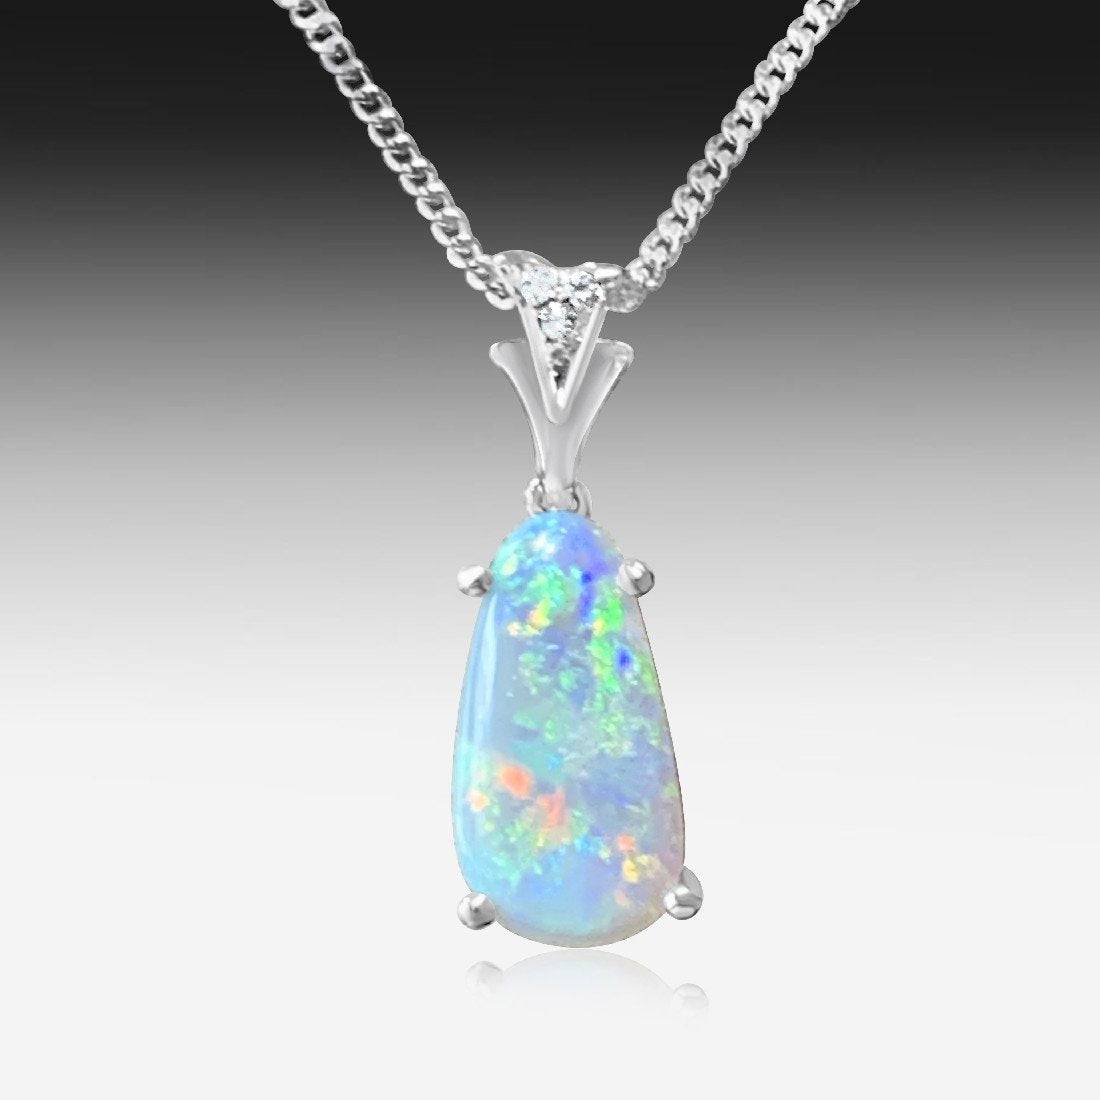 18K White Gold pendant set with Black Opal and Diamonds - Masterpiece Jewellery Opal & Gems Sydney Australia | Online Shop